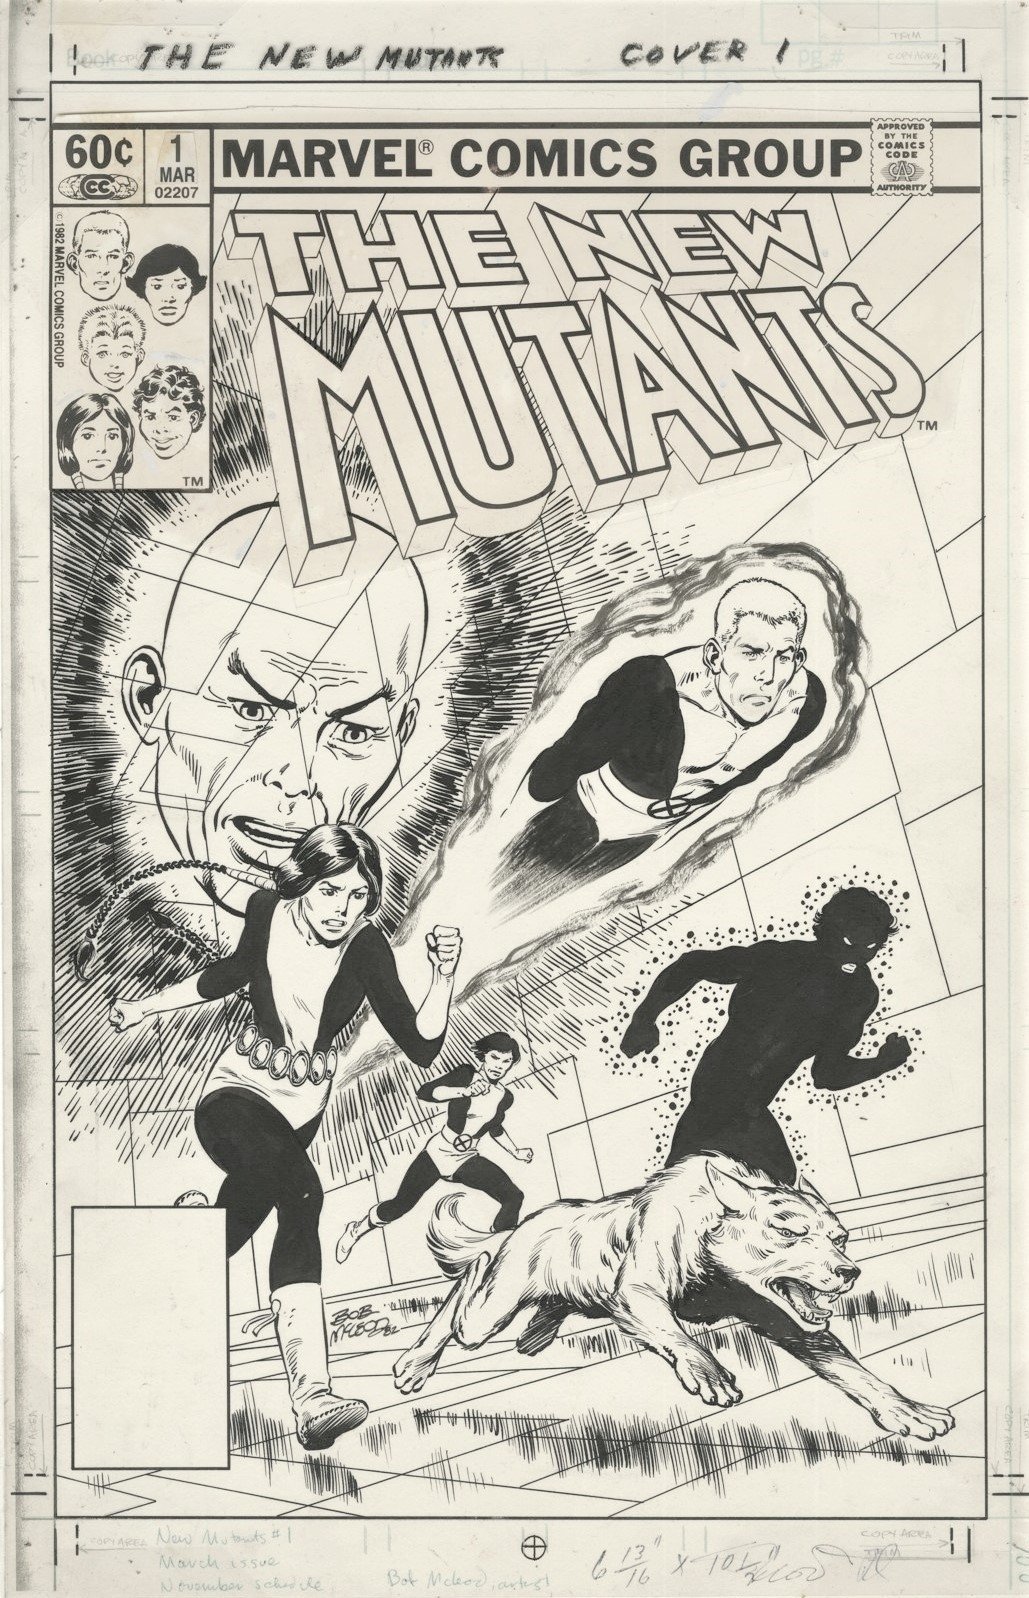 The New Mutants #2 (Apr 1983, Marvel)